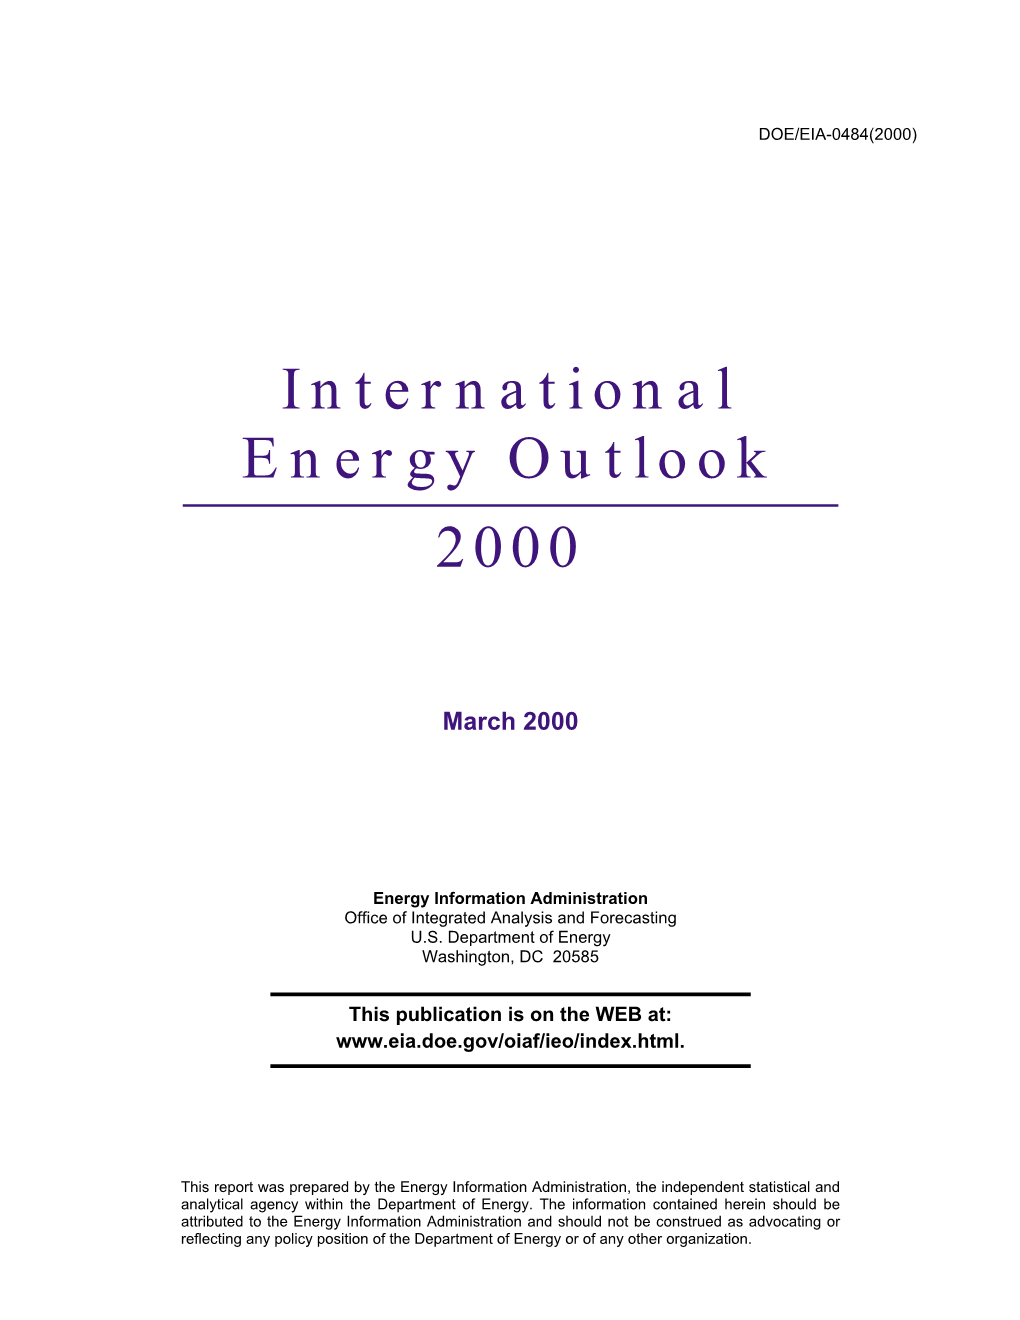 International Energy Outlook 2000